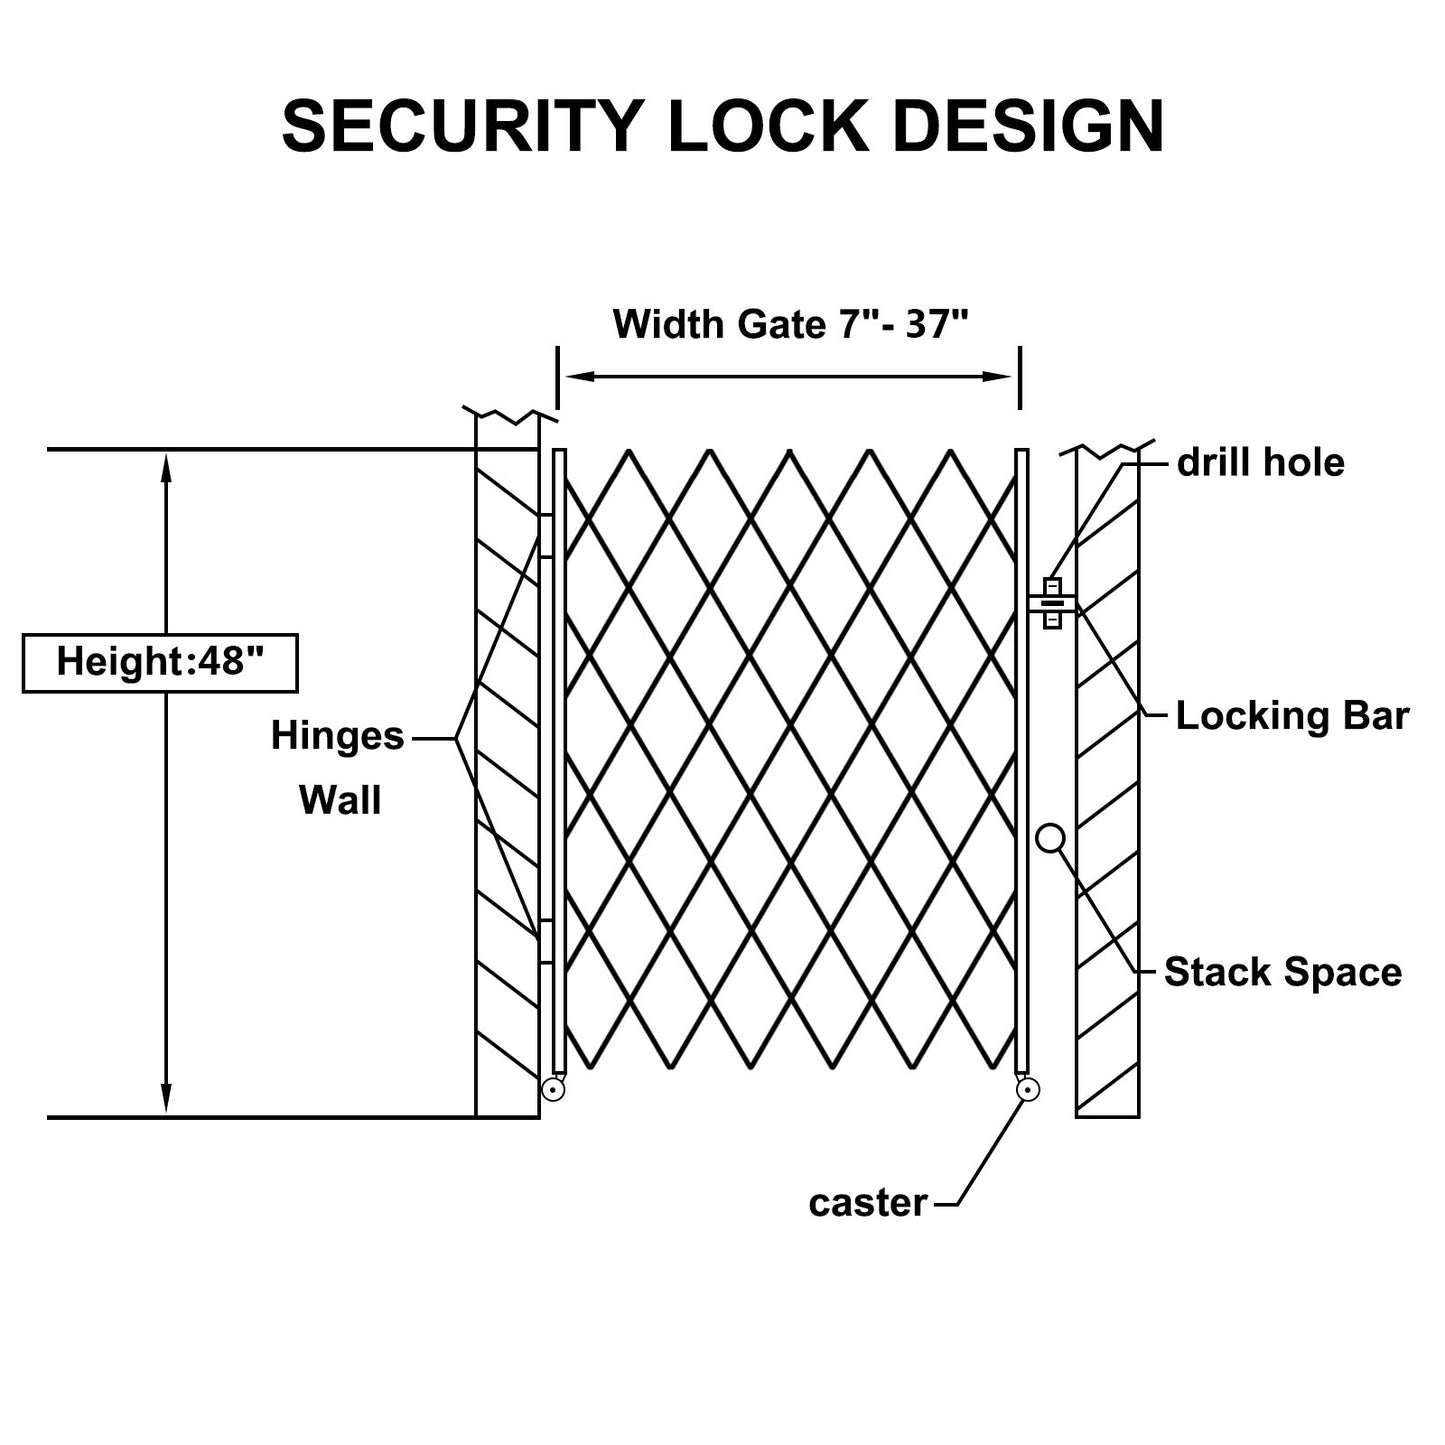 Folding Security Gate